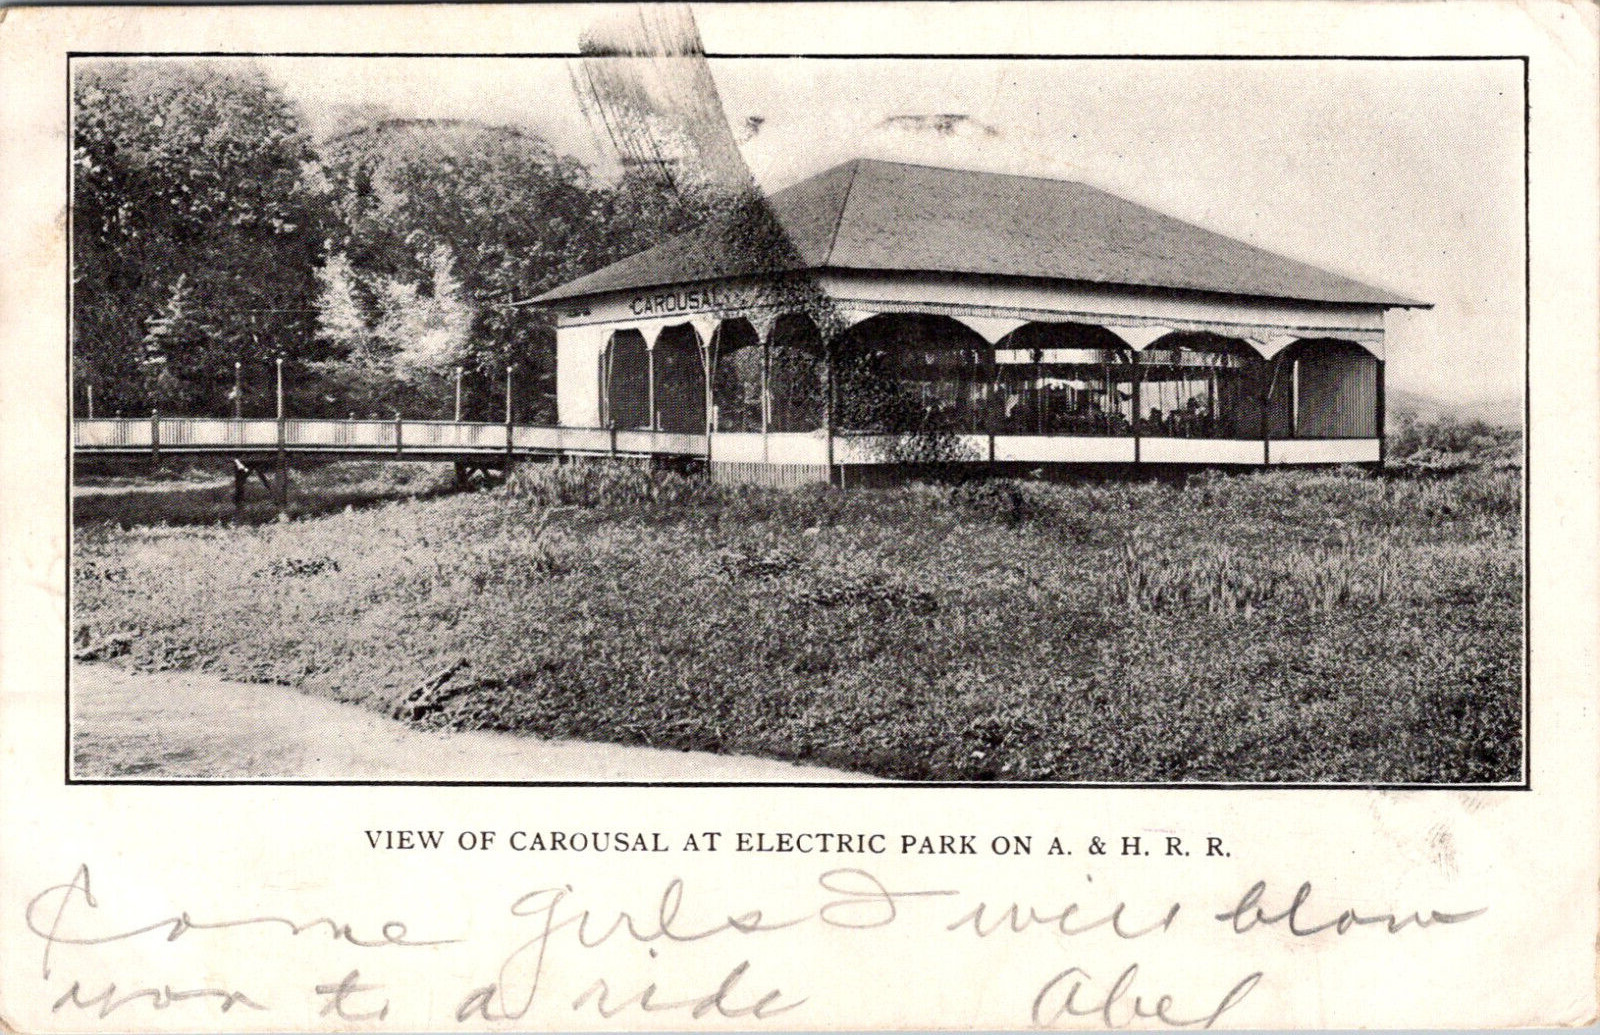 KINDERHOOK, NEW  YORK - ELECTRIC PARK CAROUSAL - A & H RAILROAD - 1906 POSTCARD